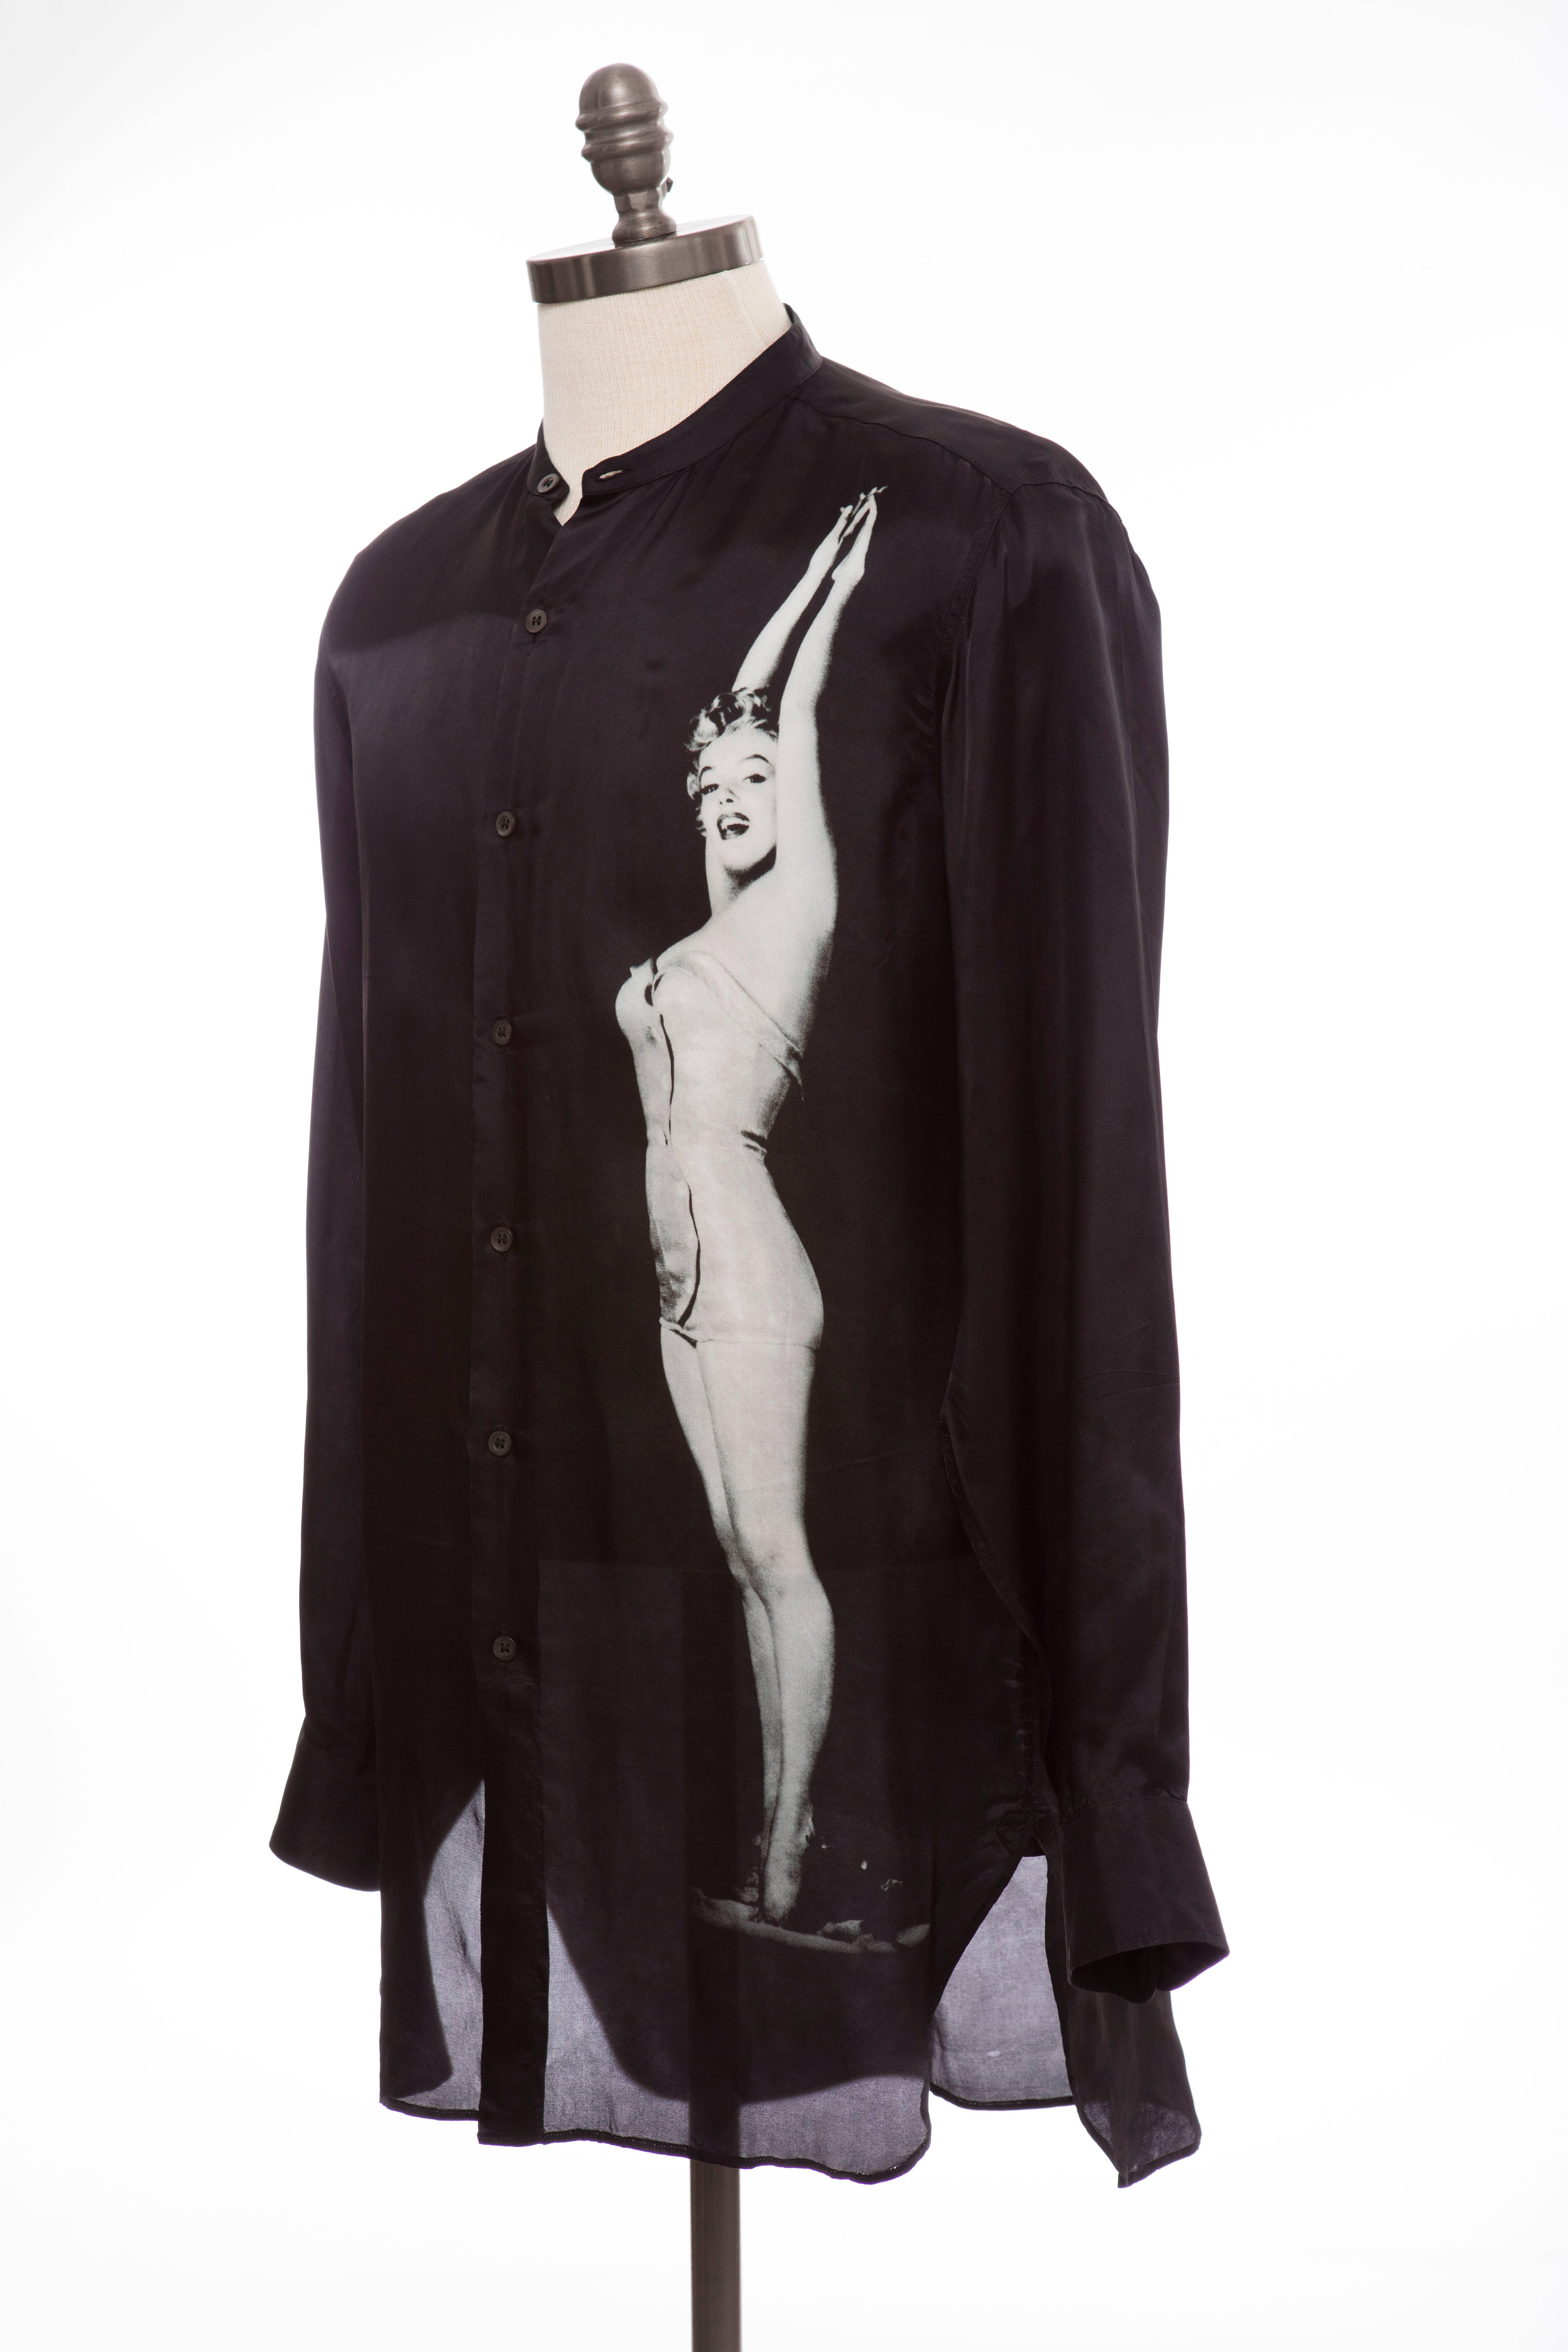 Dries Van Noten, Spring-Summer 2016 men's black viscose button front shirt,mandarin collar with Marilyn Monroe print.

IT.48
US.

Chest: 38, Length 35, Sleeve 36, Neck 15.5
